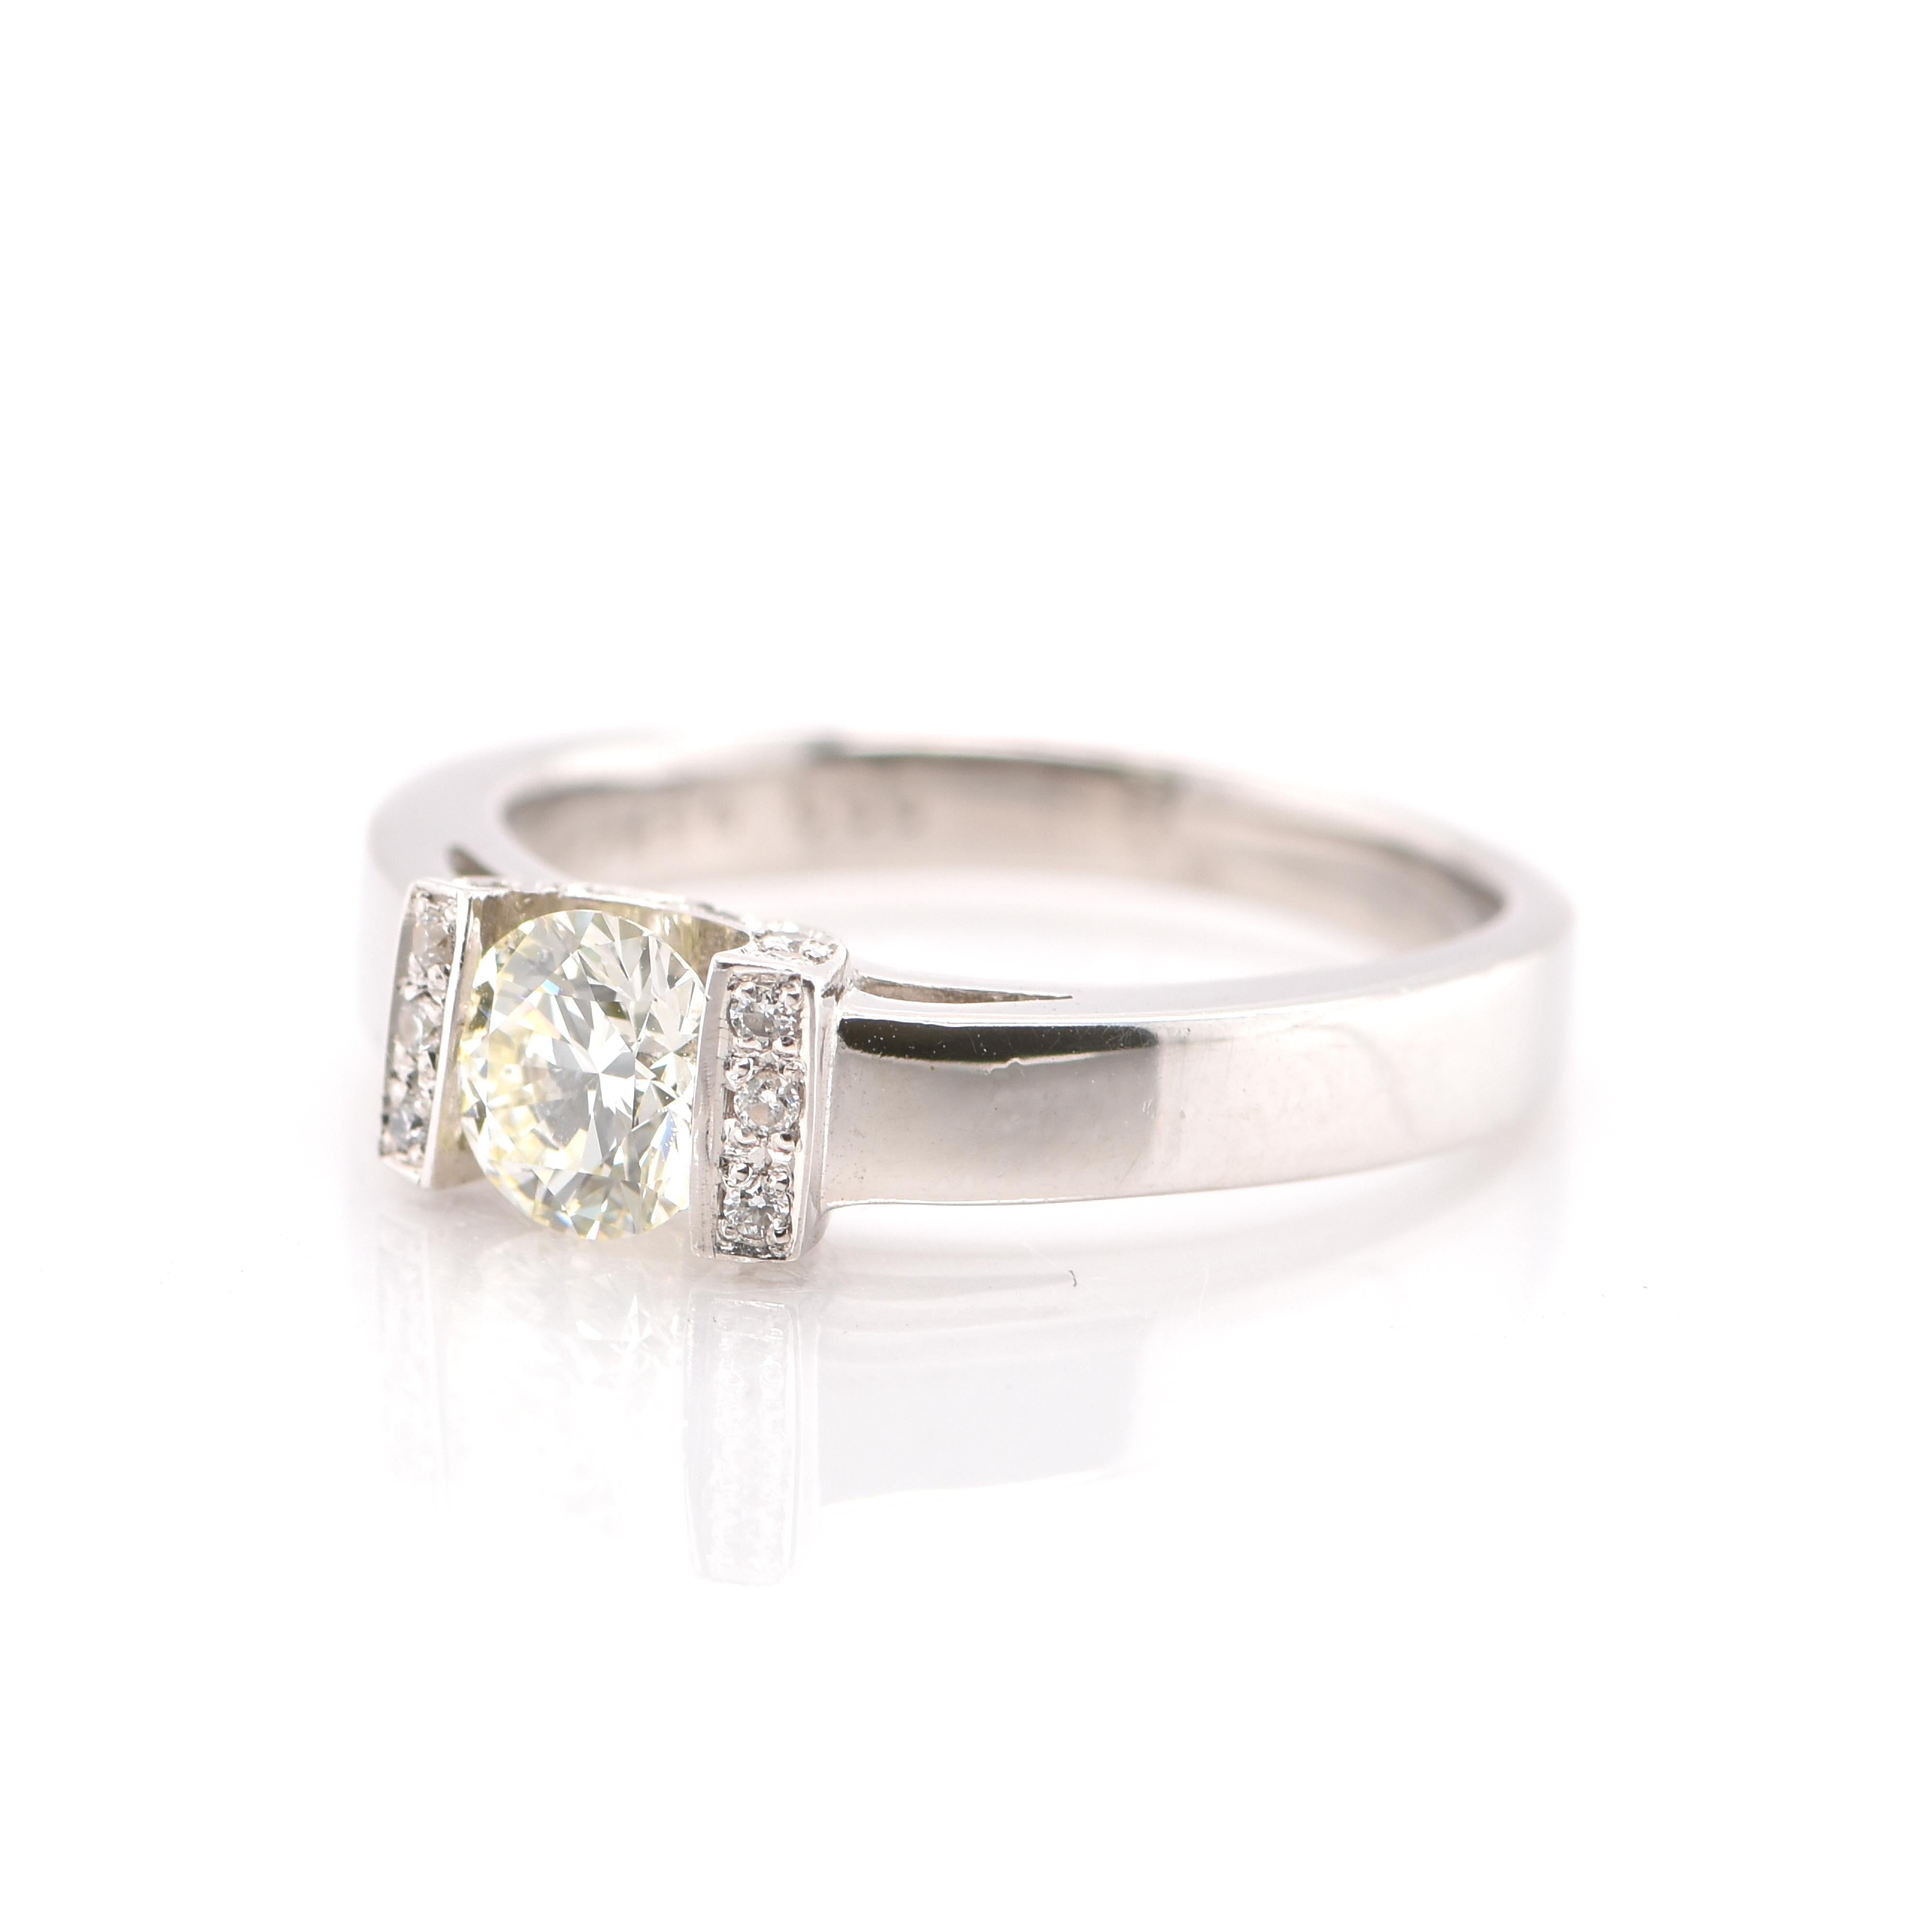 0.57 carat diamond ring